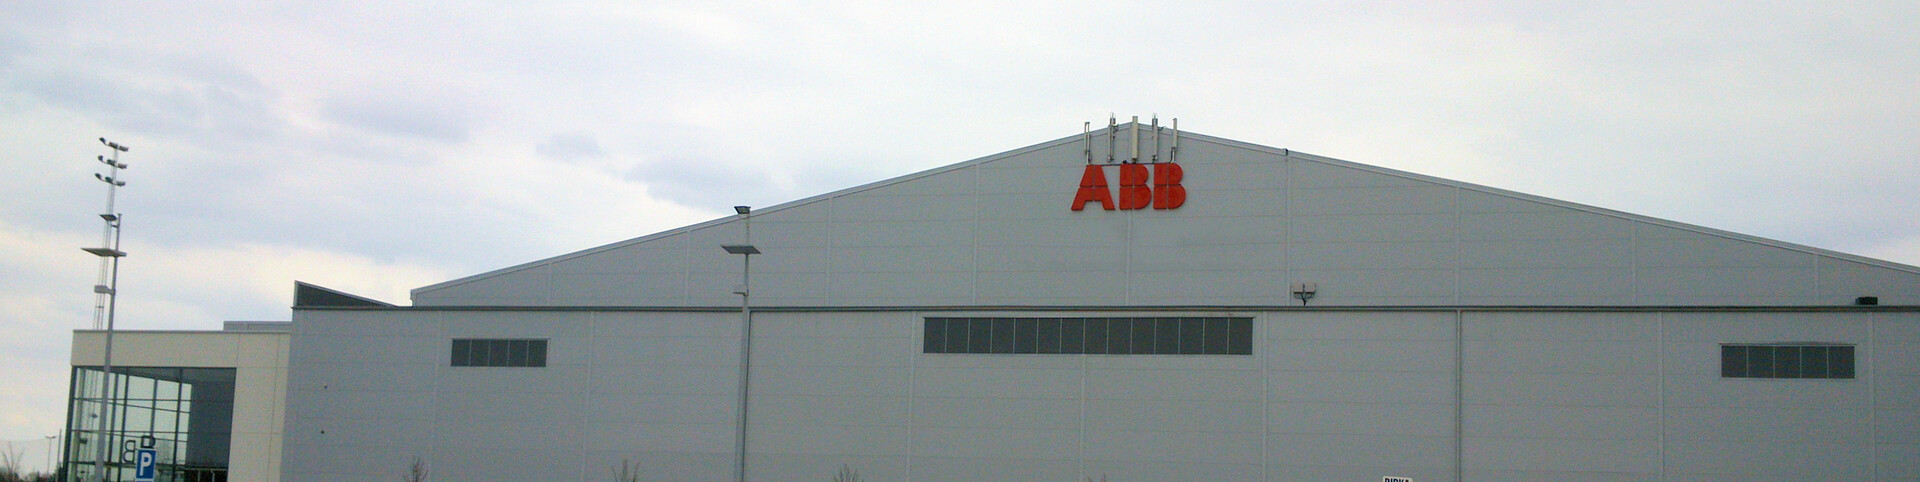 abb_estonia_hero-banner-building-without-arena